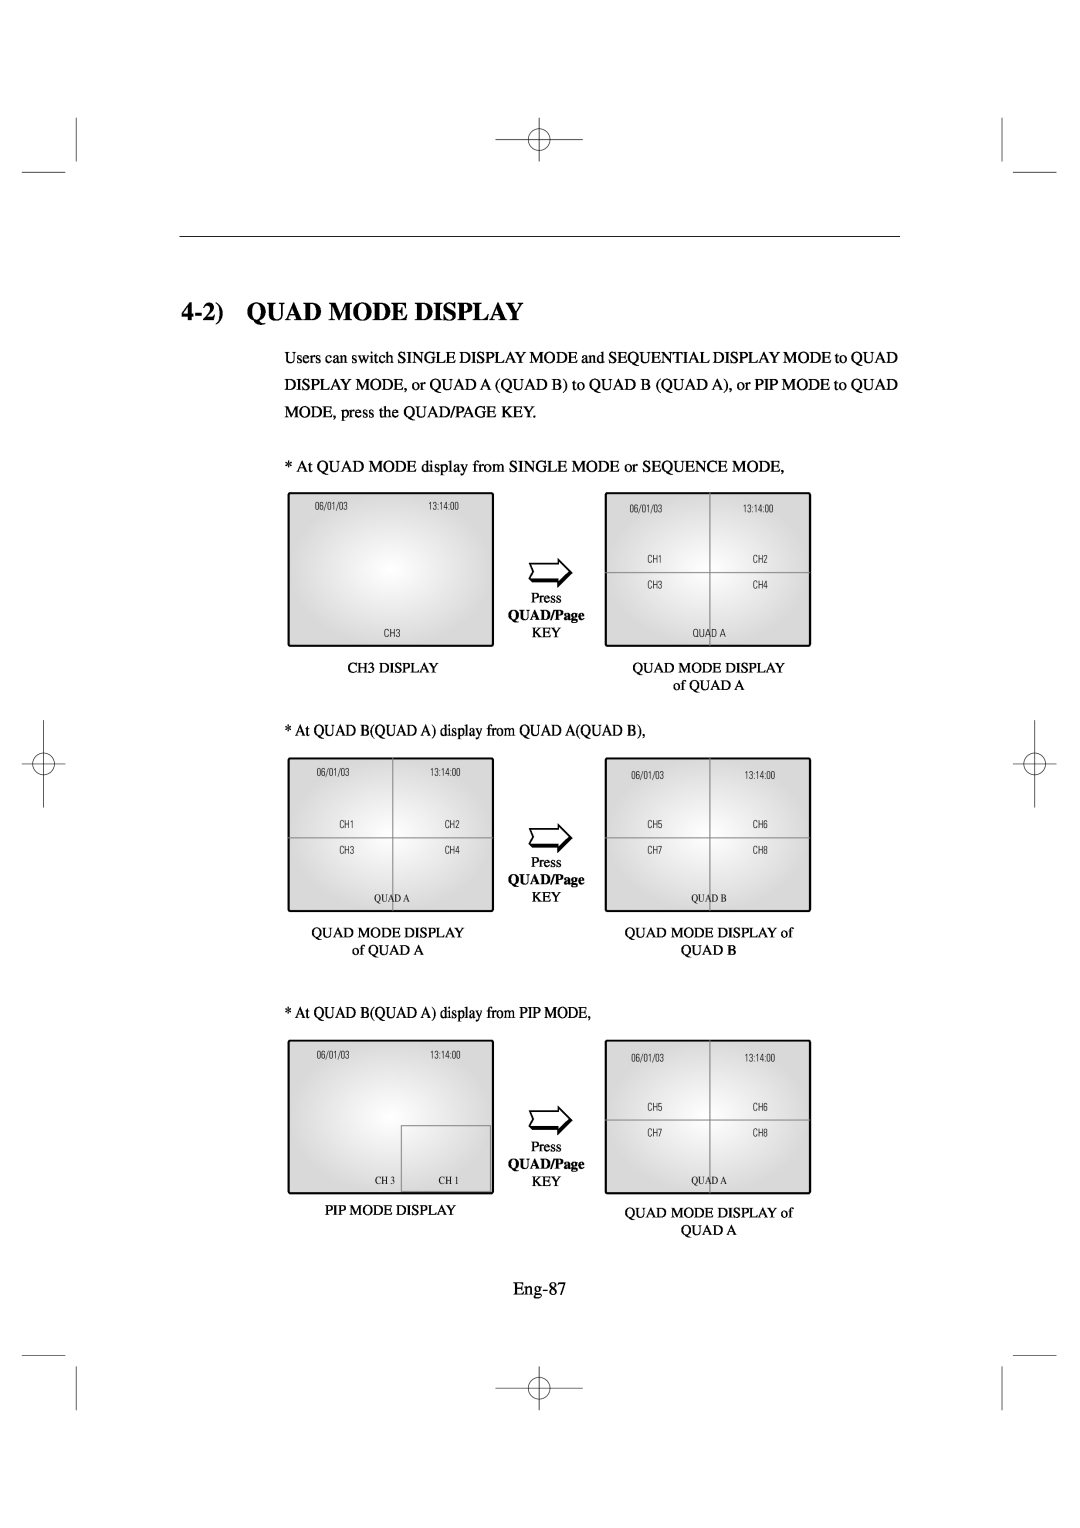 Samsung SSC17WEB manual 4-2QUAD MODE DISPLAY, Eng-87 